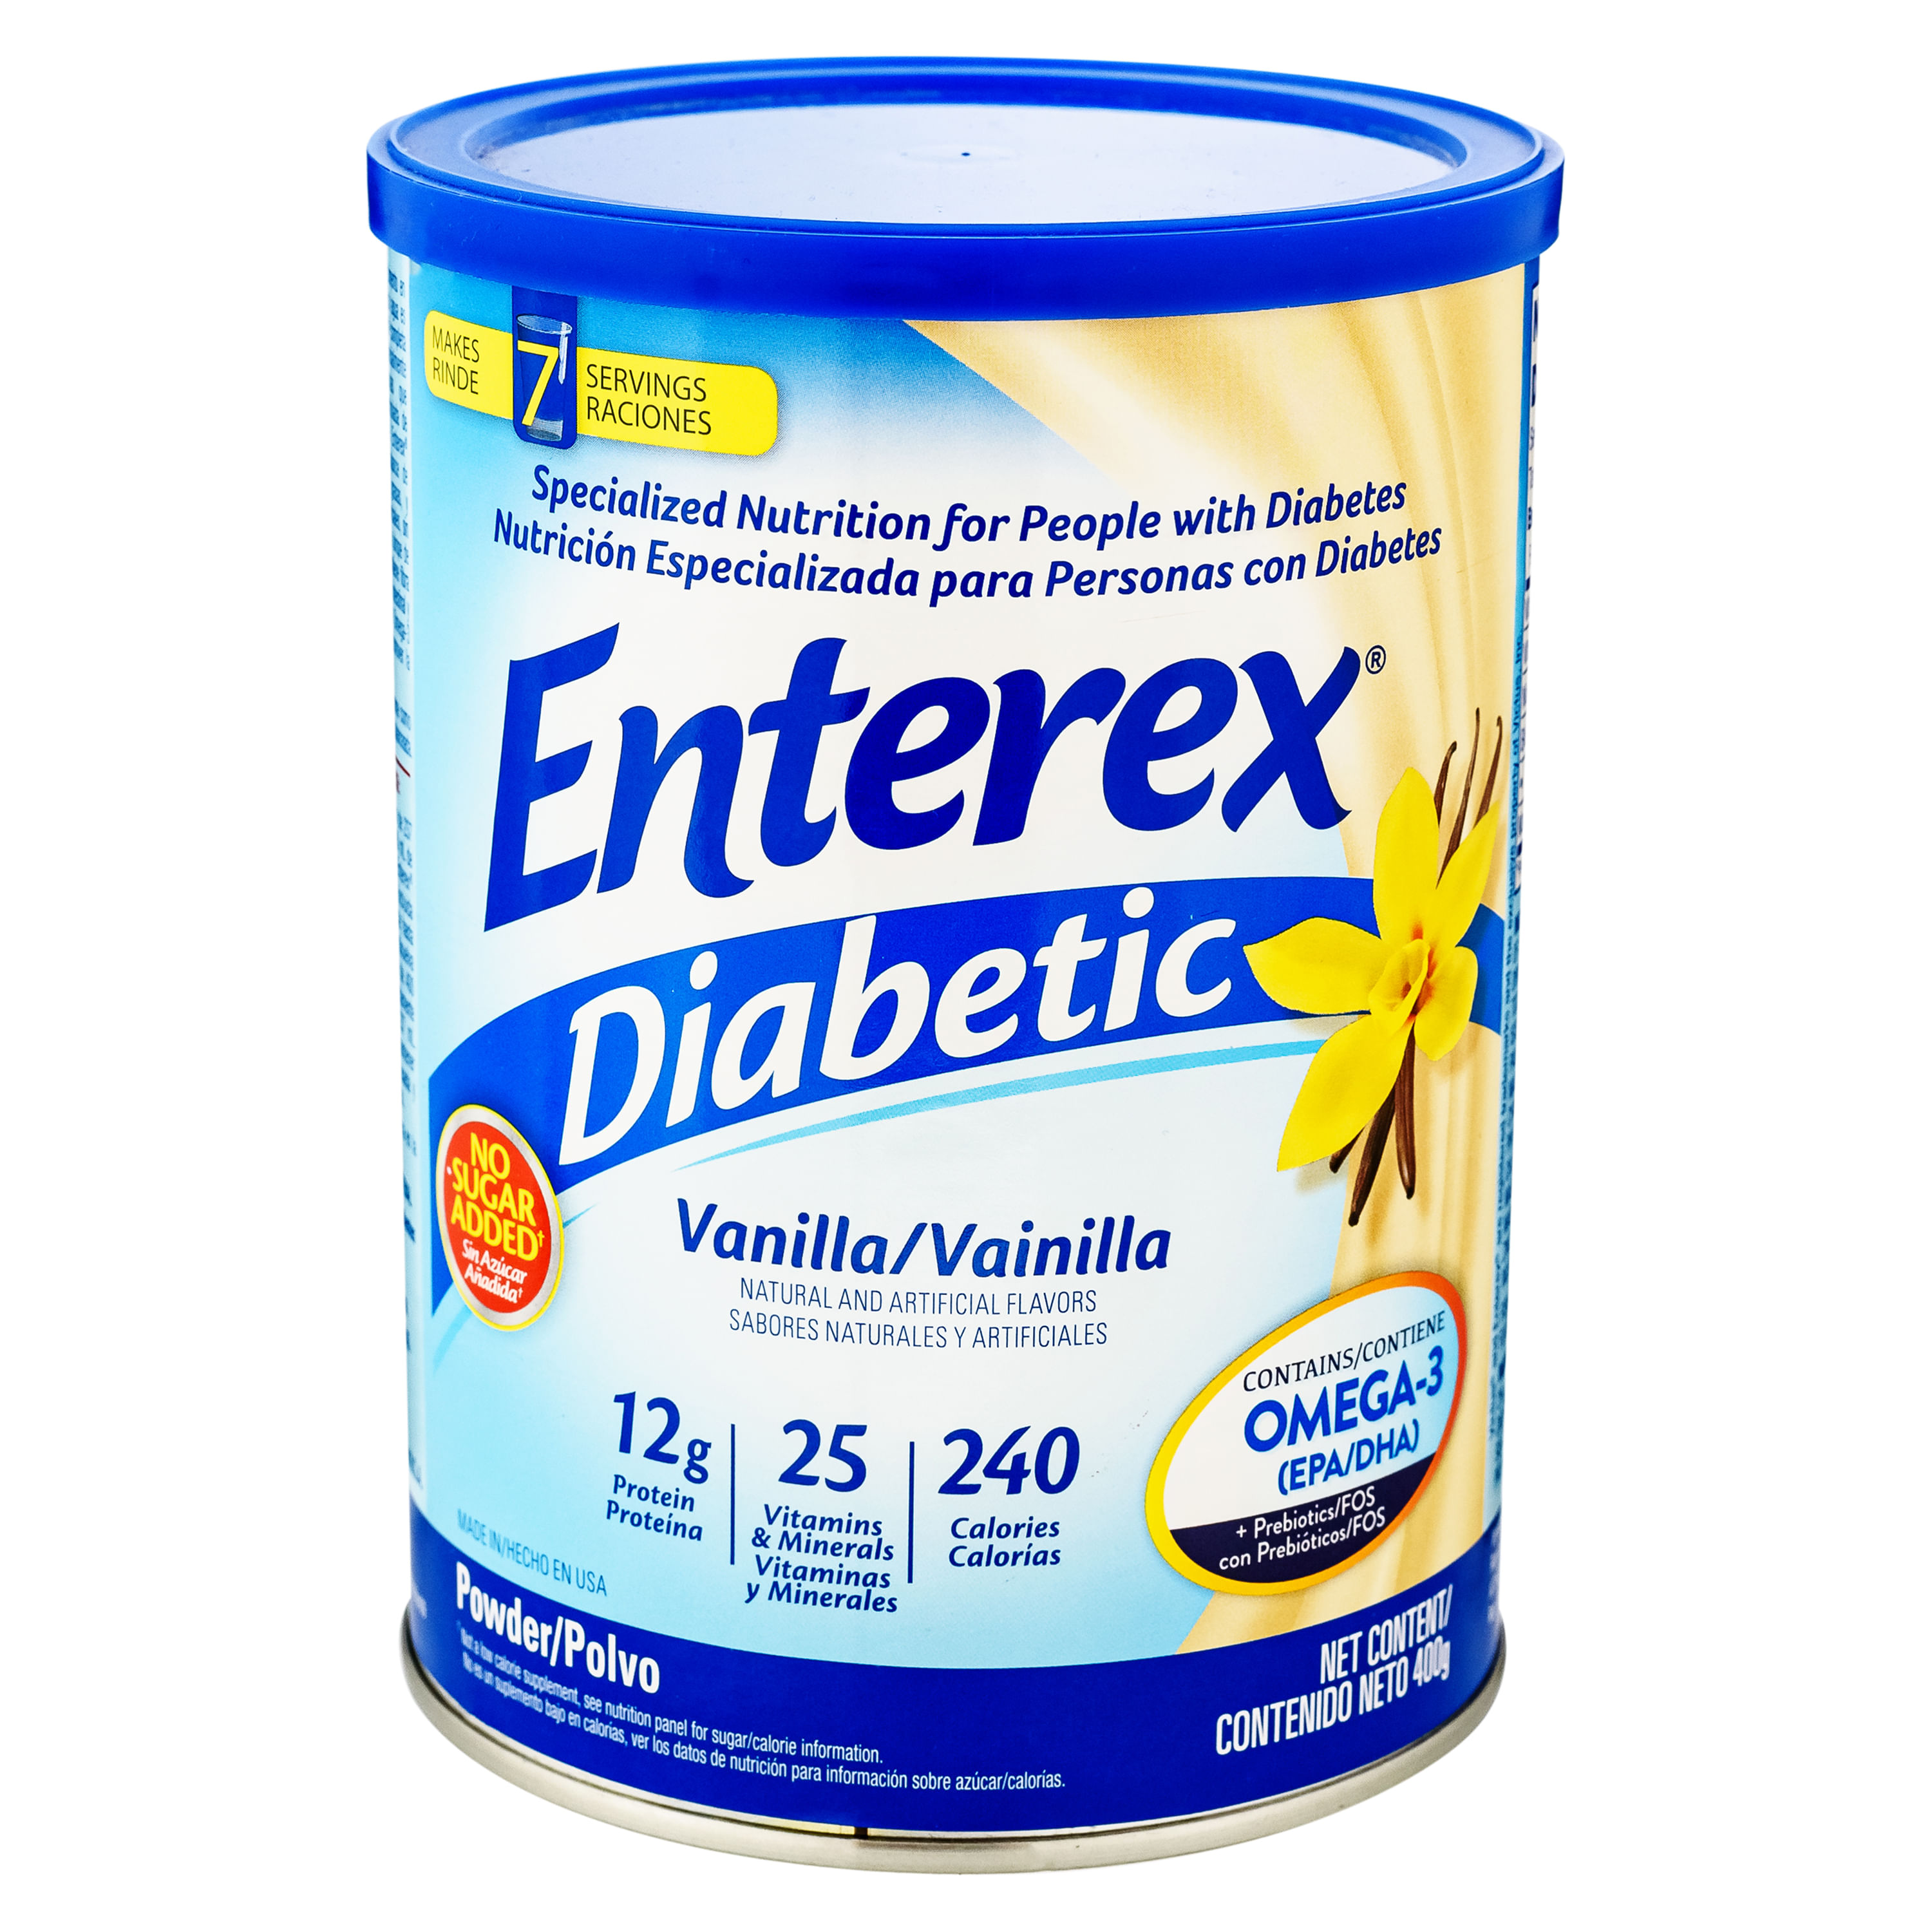 Enterex-Diabetic-400G-Polvo-1-34456